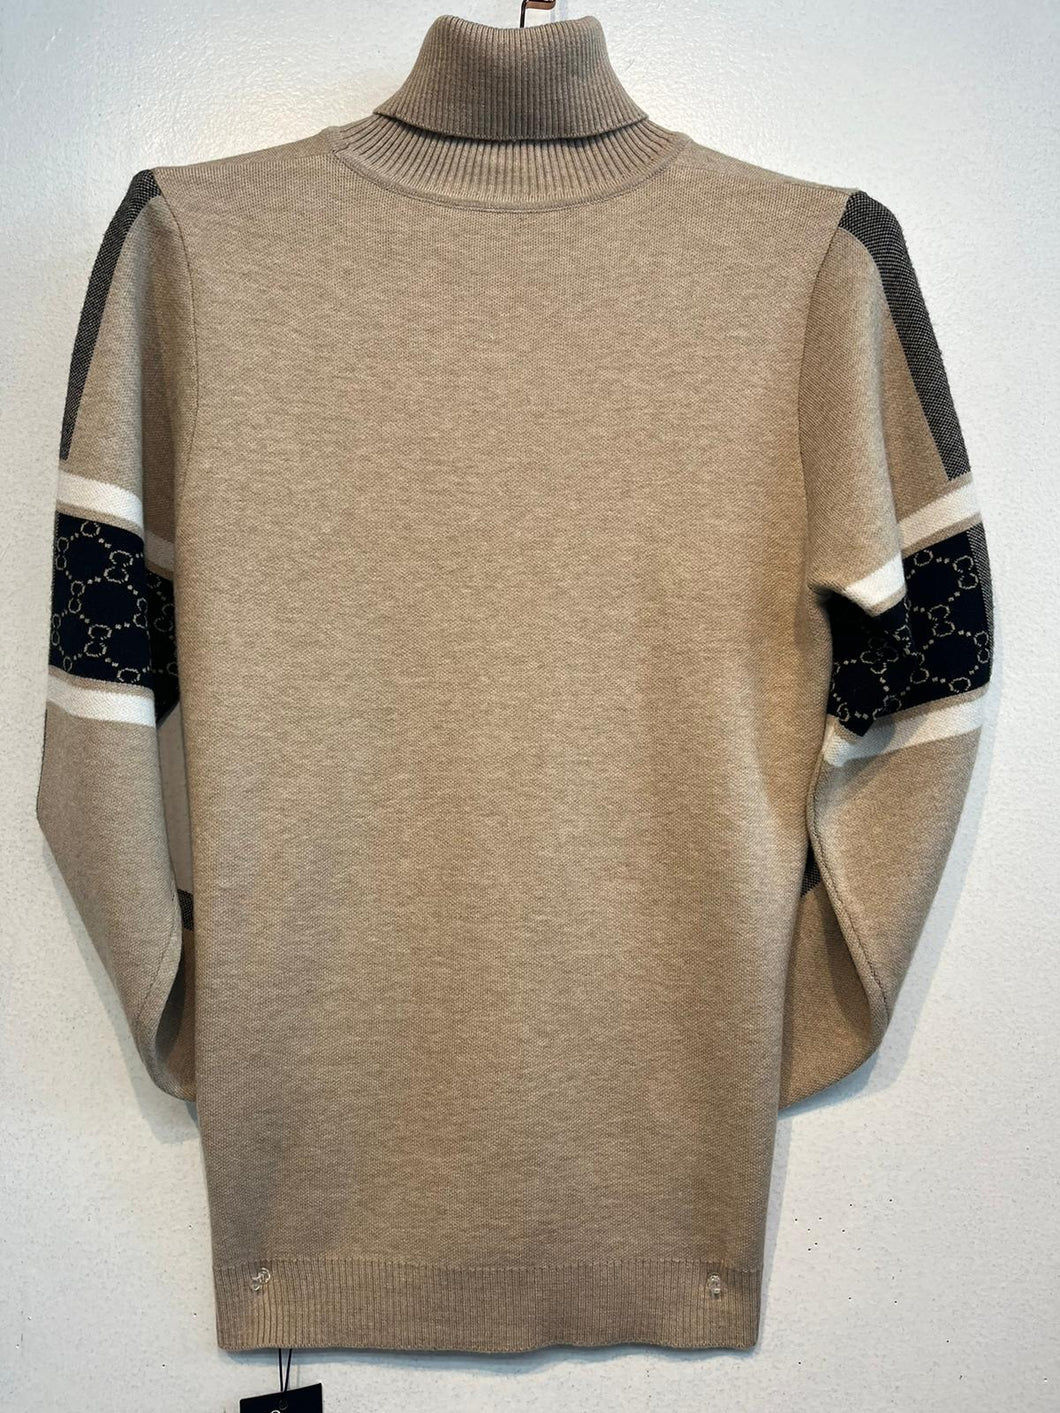 Mens De Niko Beige Turtleneck Sweater with Black Stripes – NikoClothing